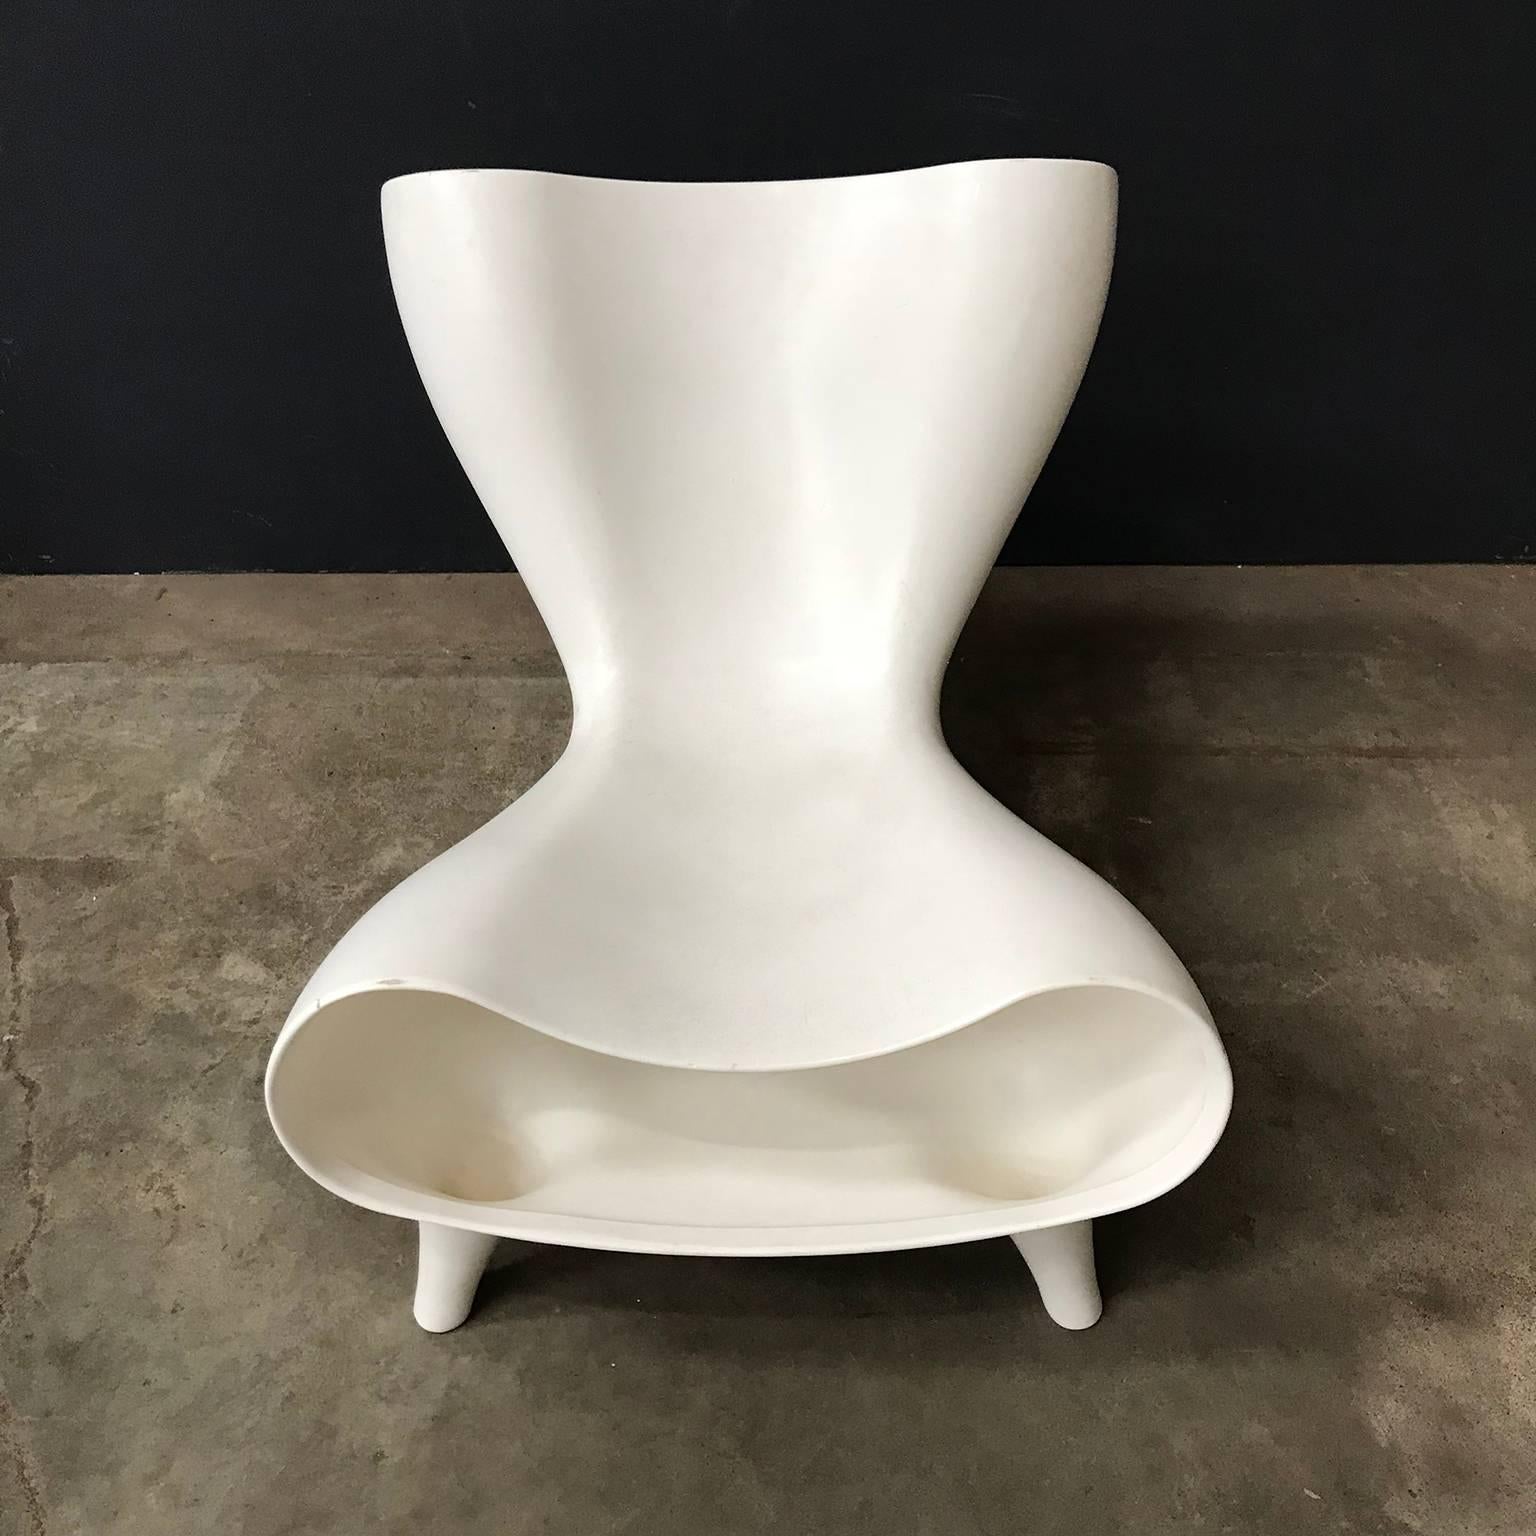 Fin du 20e siècle Chaise Orgone blanche, Marc Newson, 1983 en vente